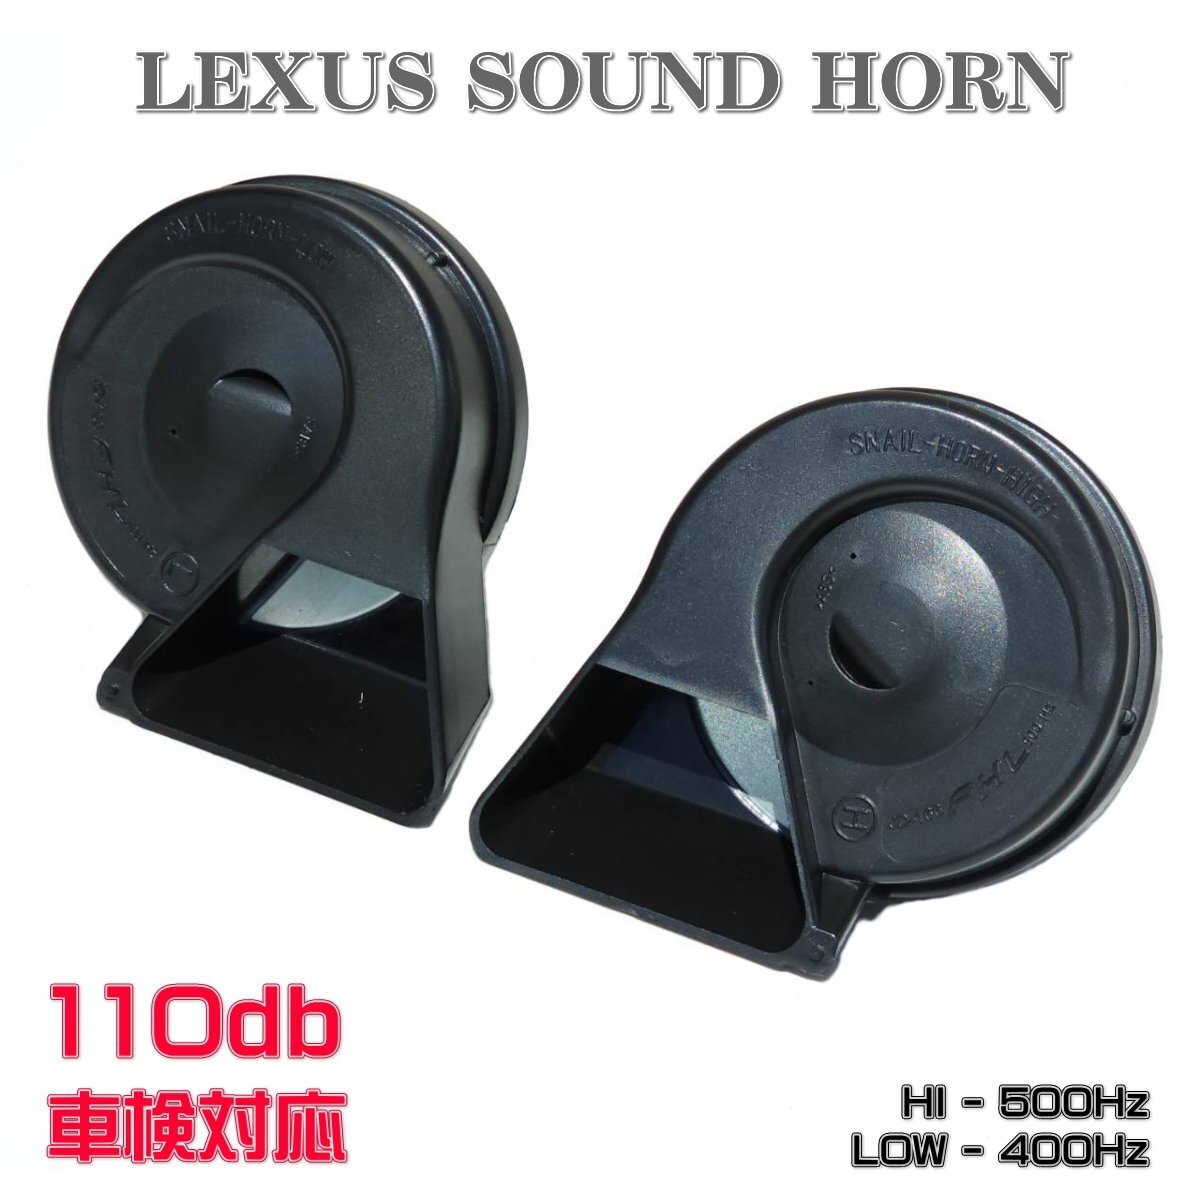 * immediate payment new model Lexus sound horn Toyota exclusive use coupler attaching all-purpose Lexus sound premium horn LEXUS*